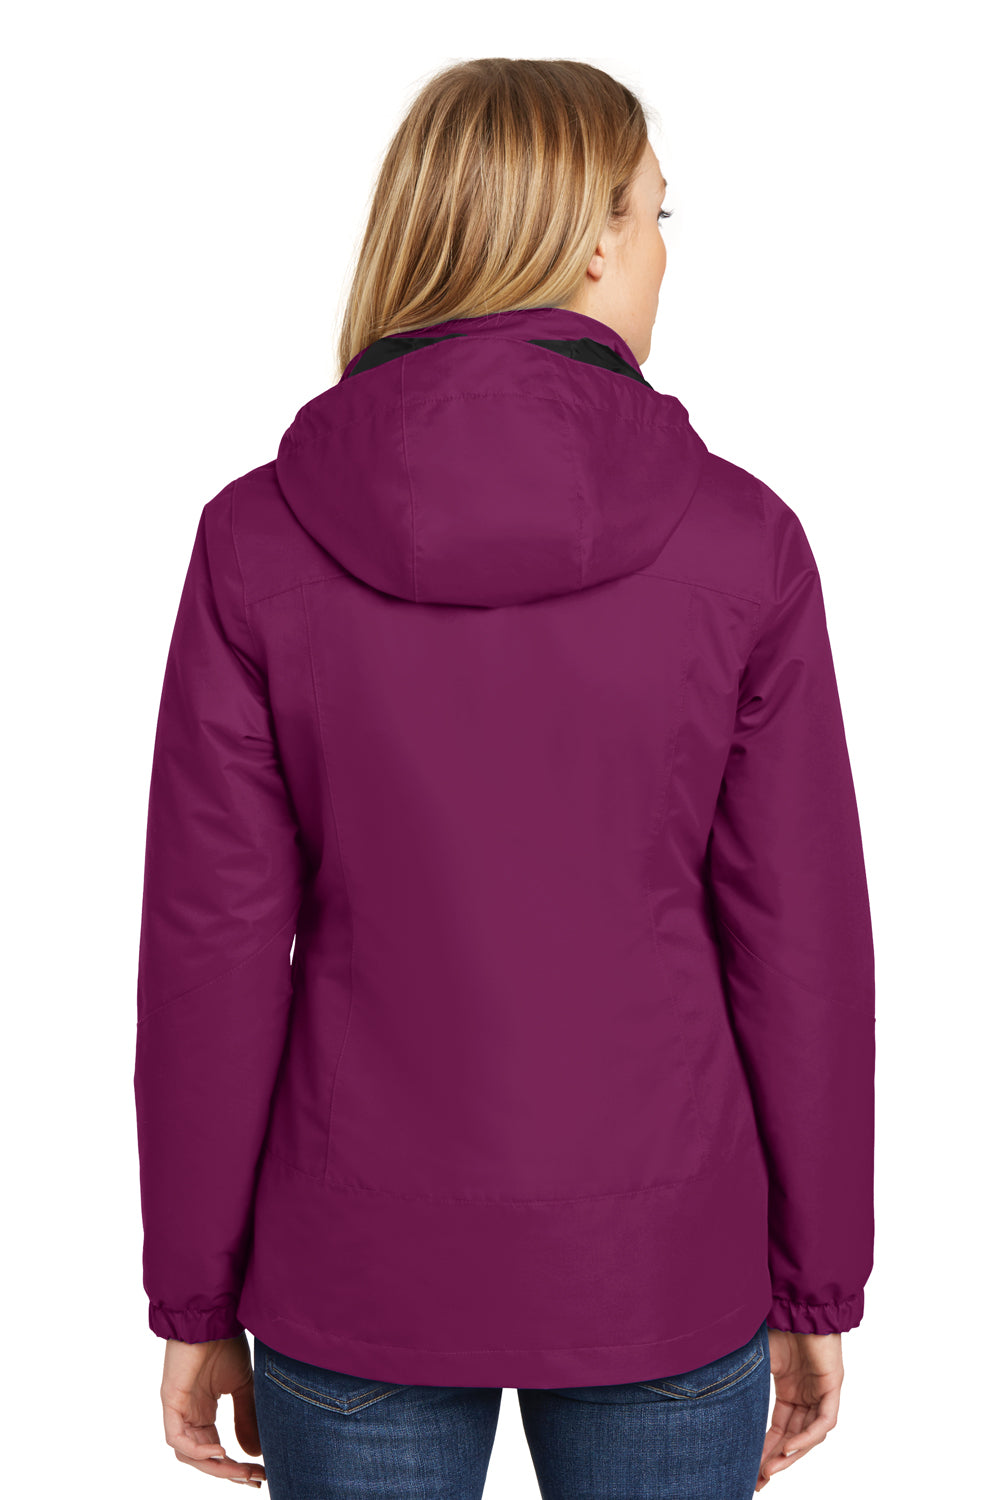 Port Authority L332 Womens Vortex 3-in-1 Waterproof Full Zip Hooded Jacket Berry Purple/Black Back